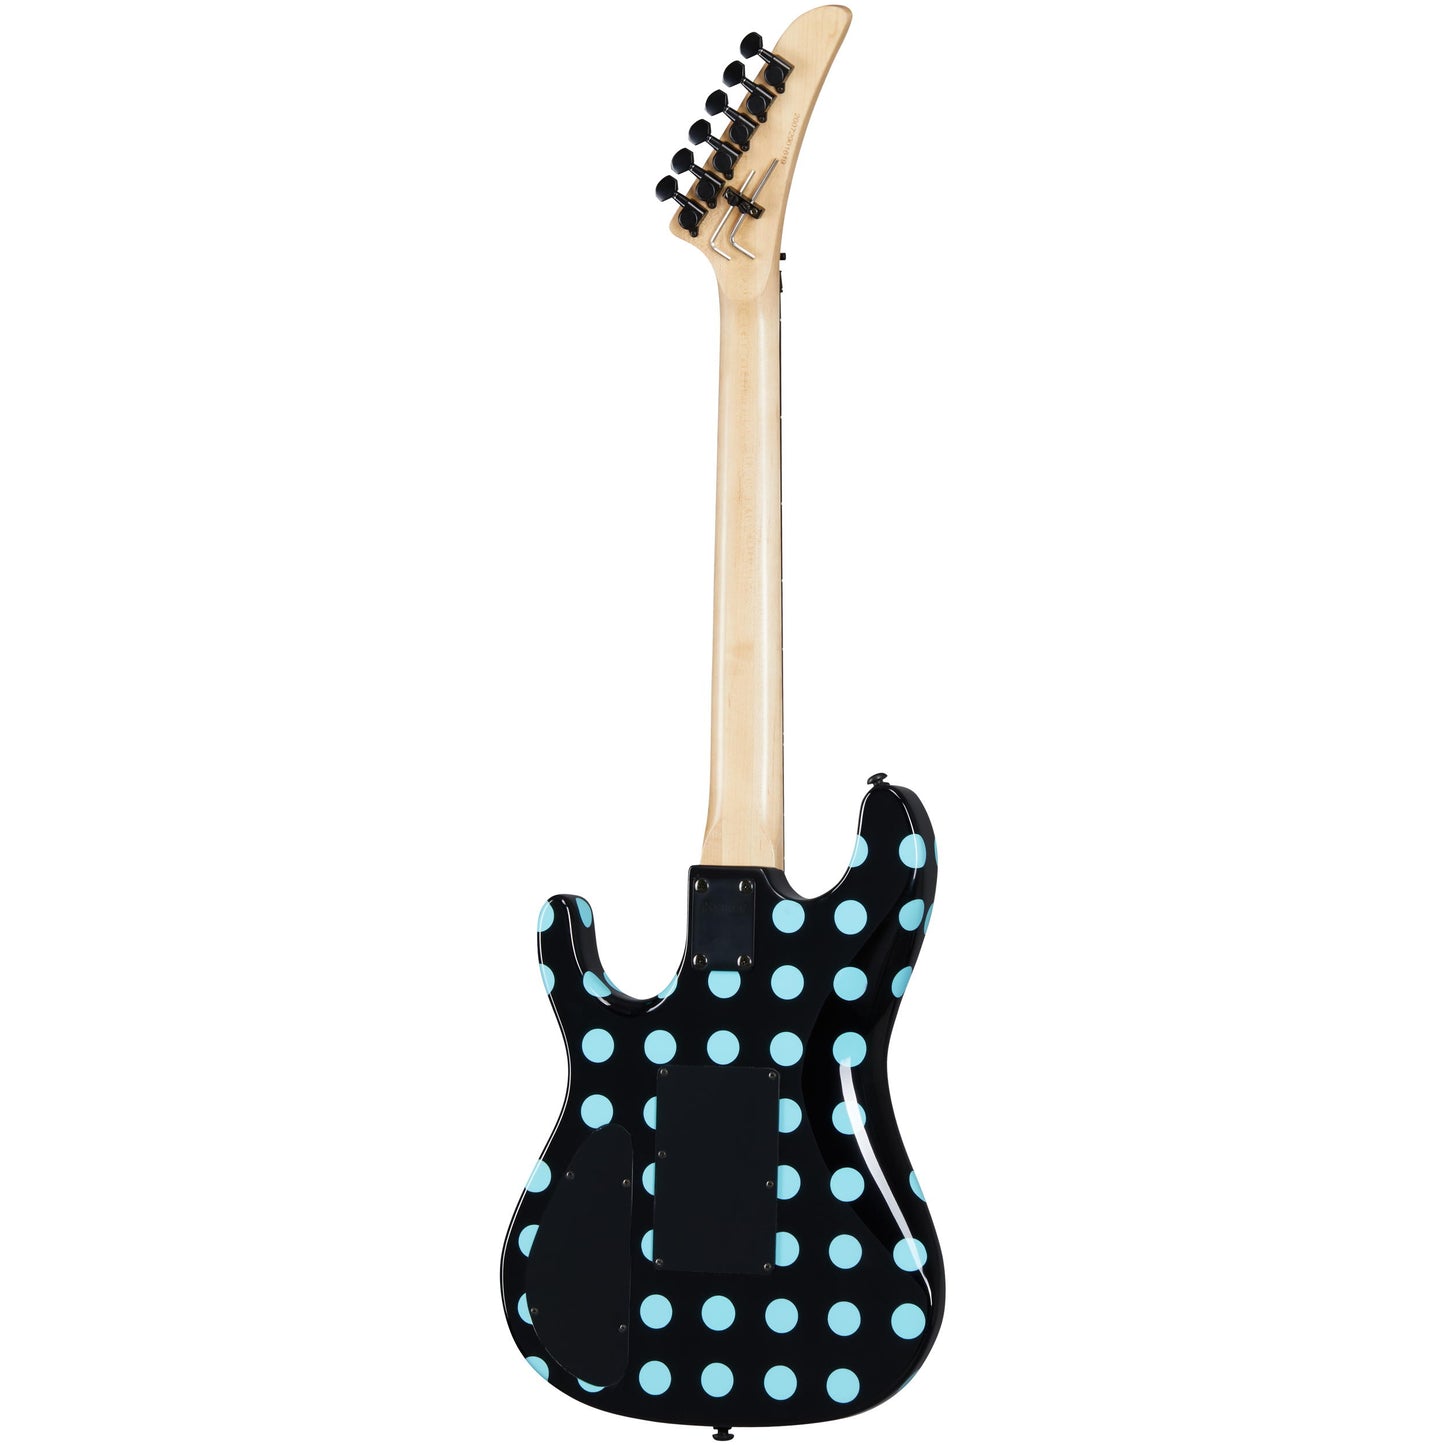 Kramer Nightswan Electric Guitar, Black with Blue Polka Dots